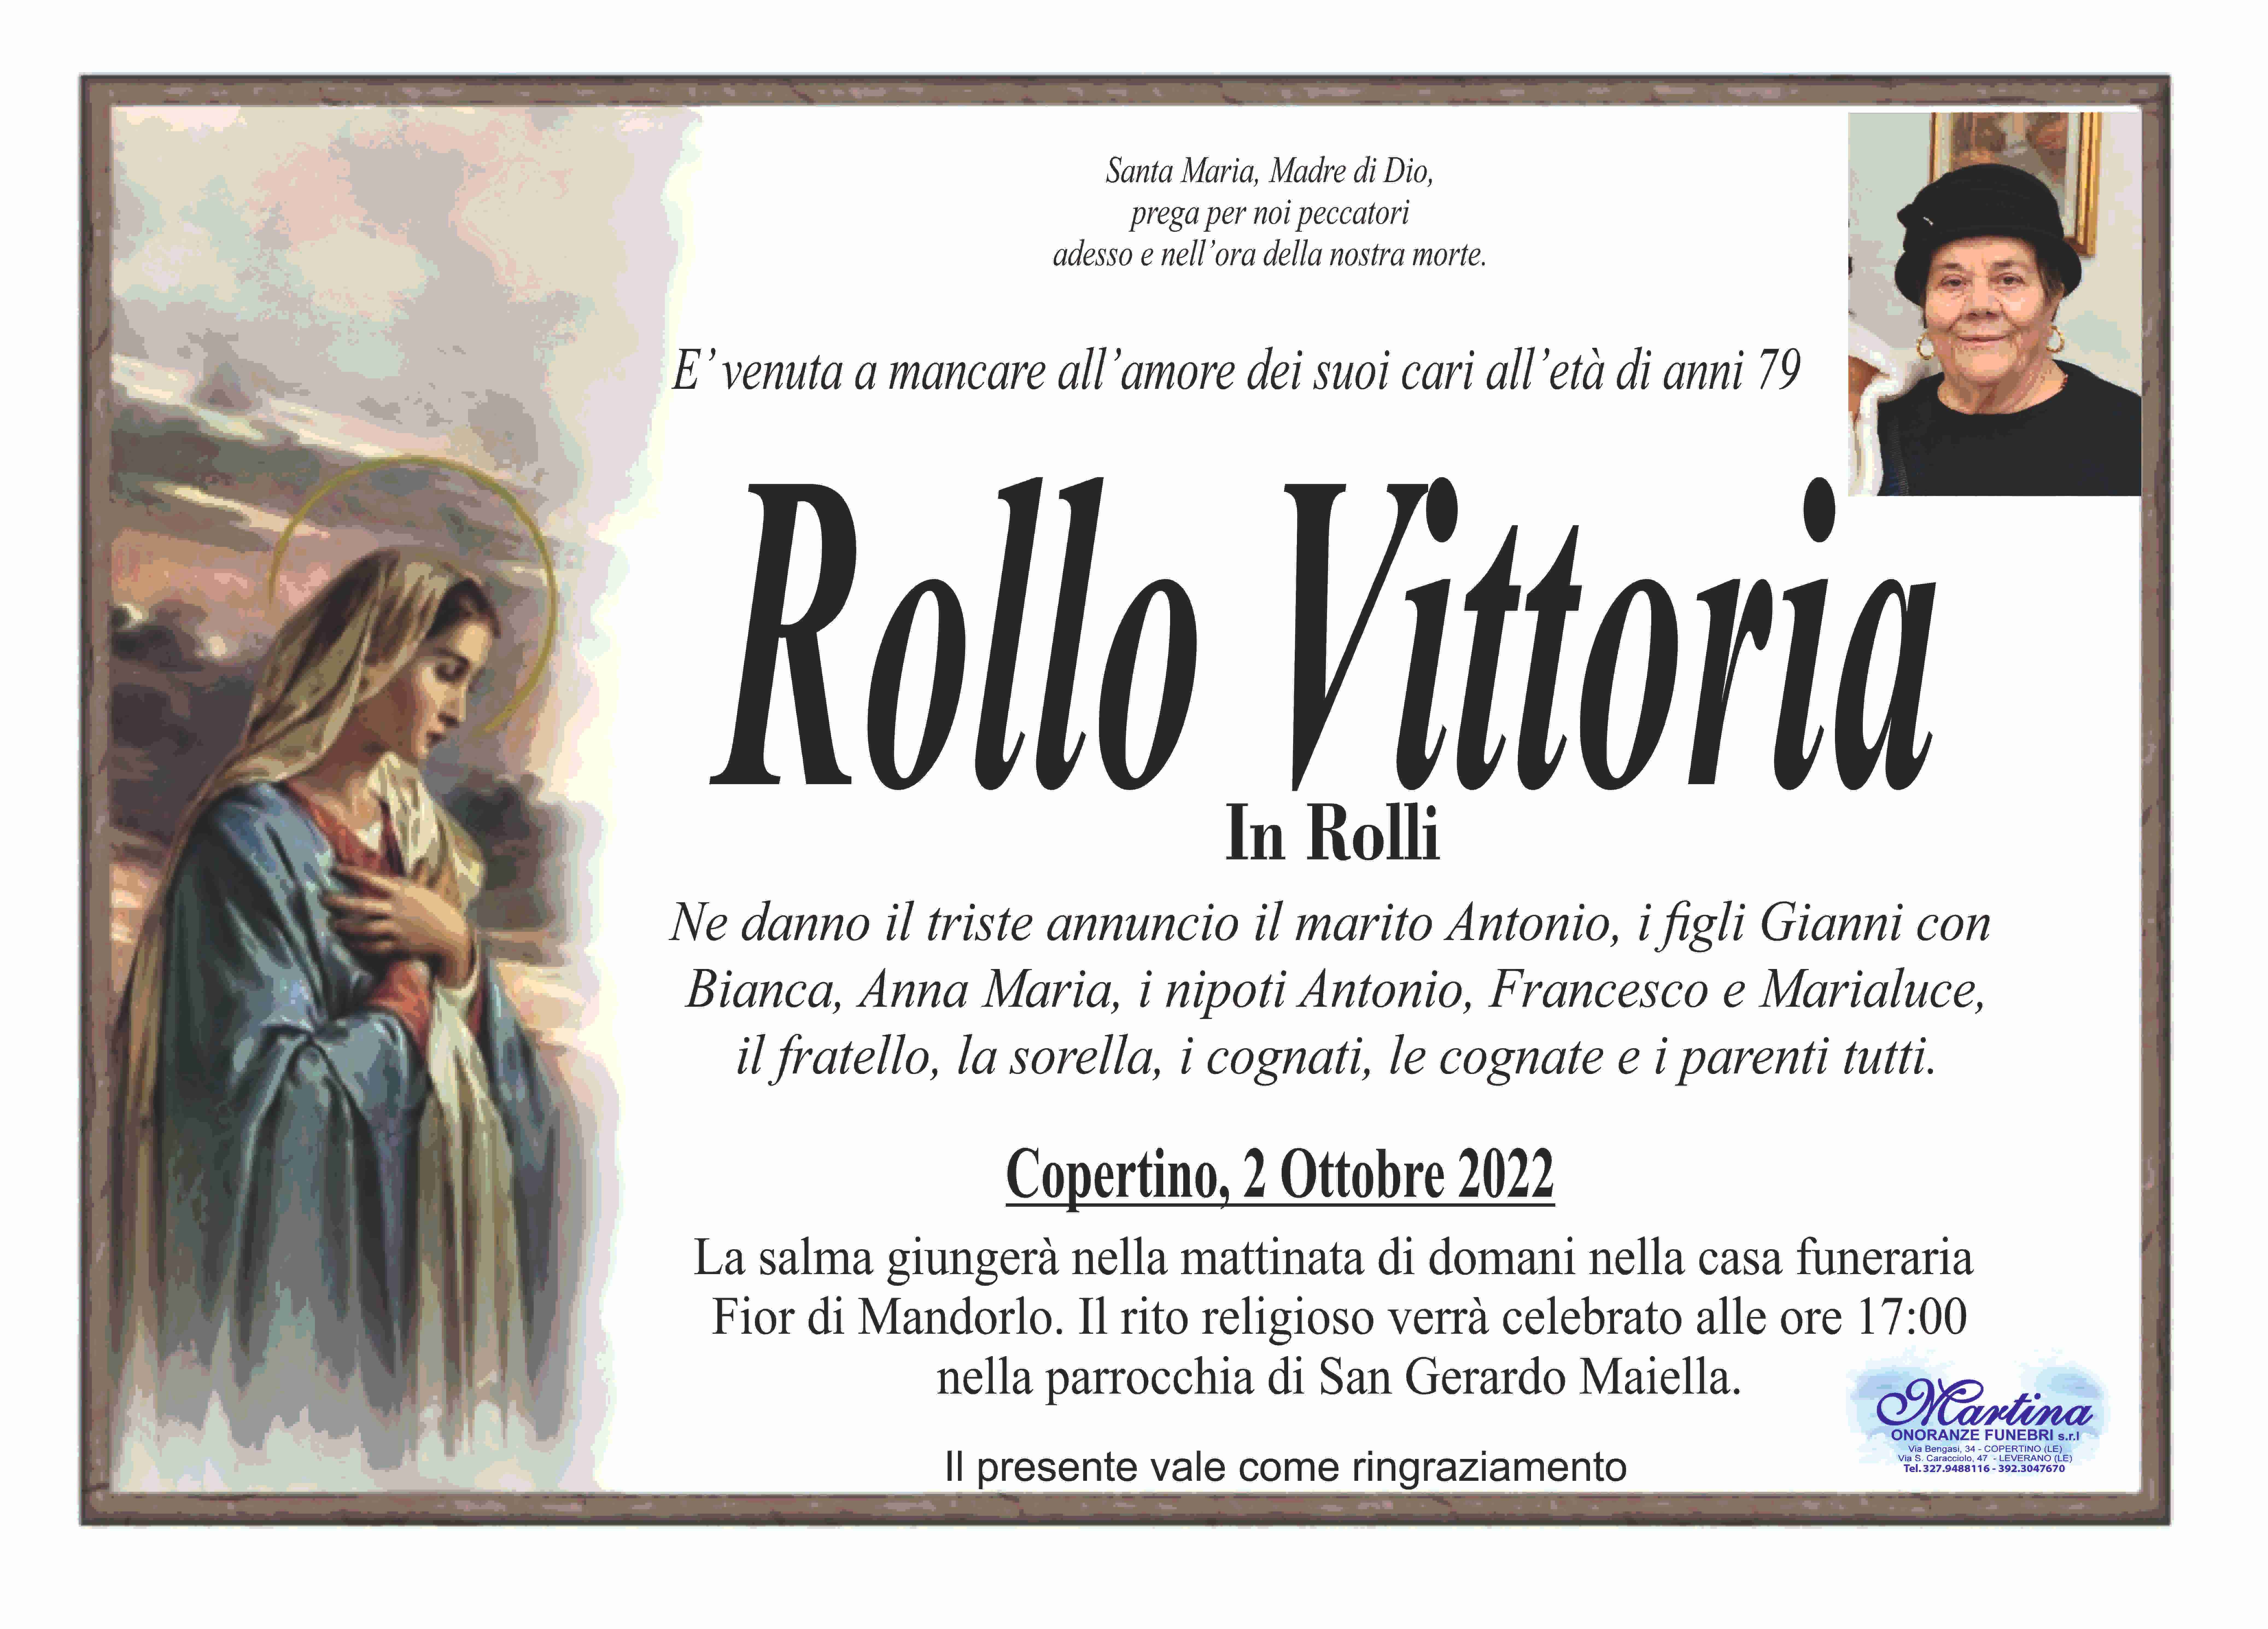 Vittoria Rollo